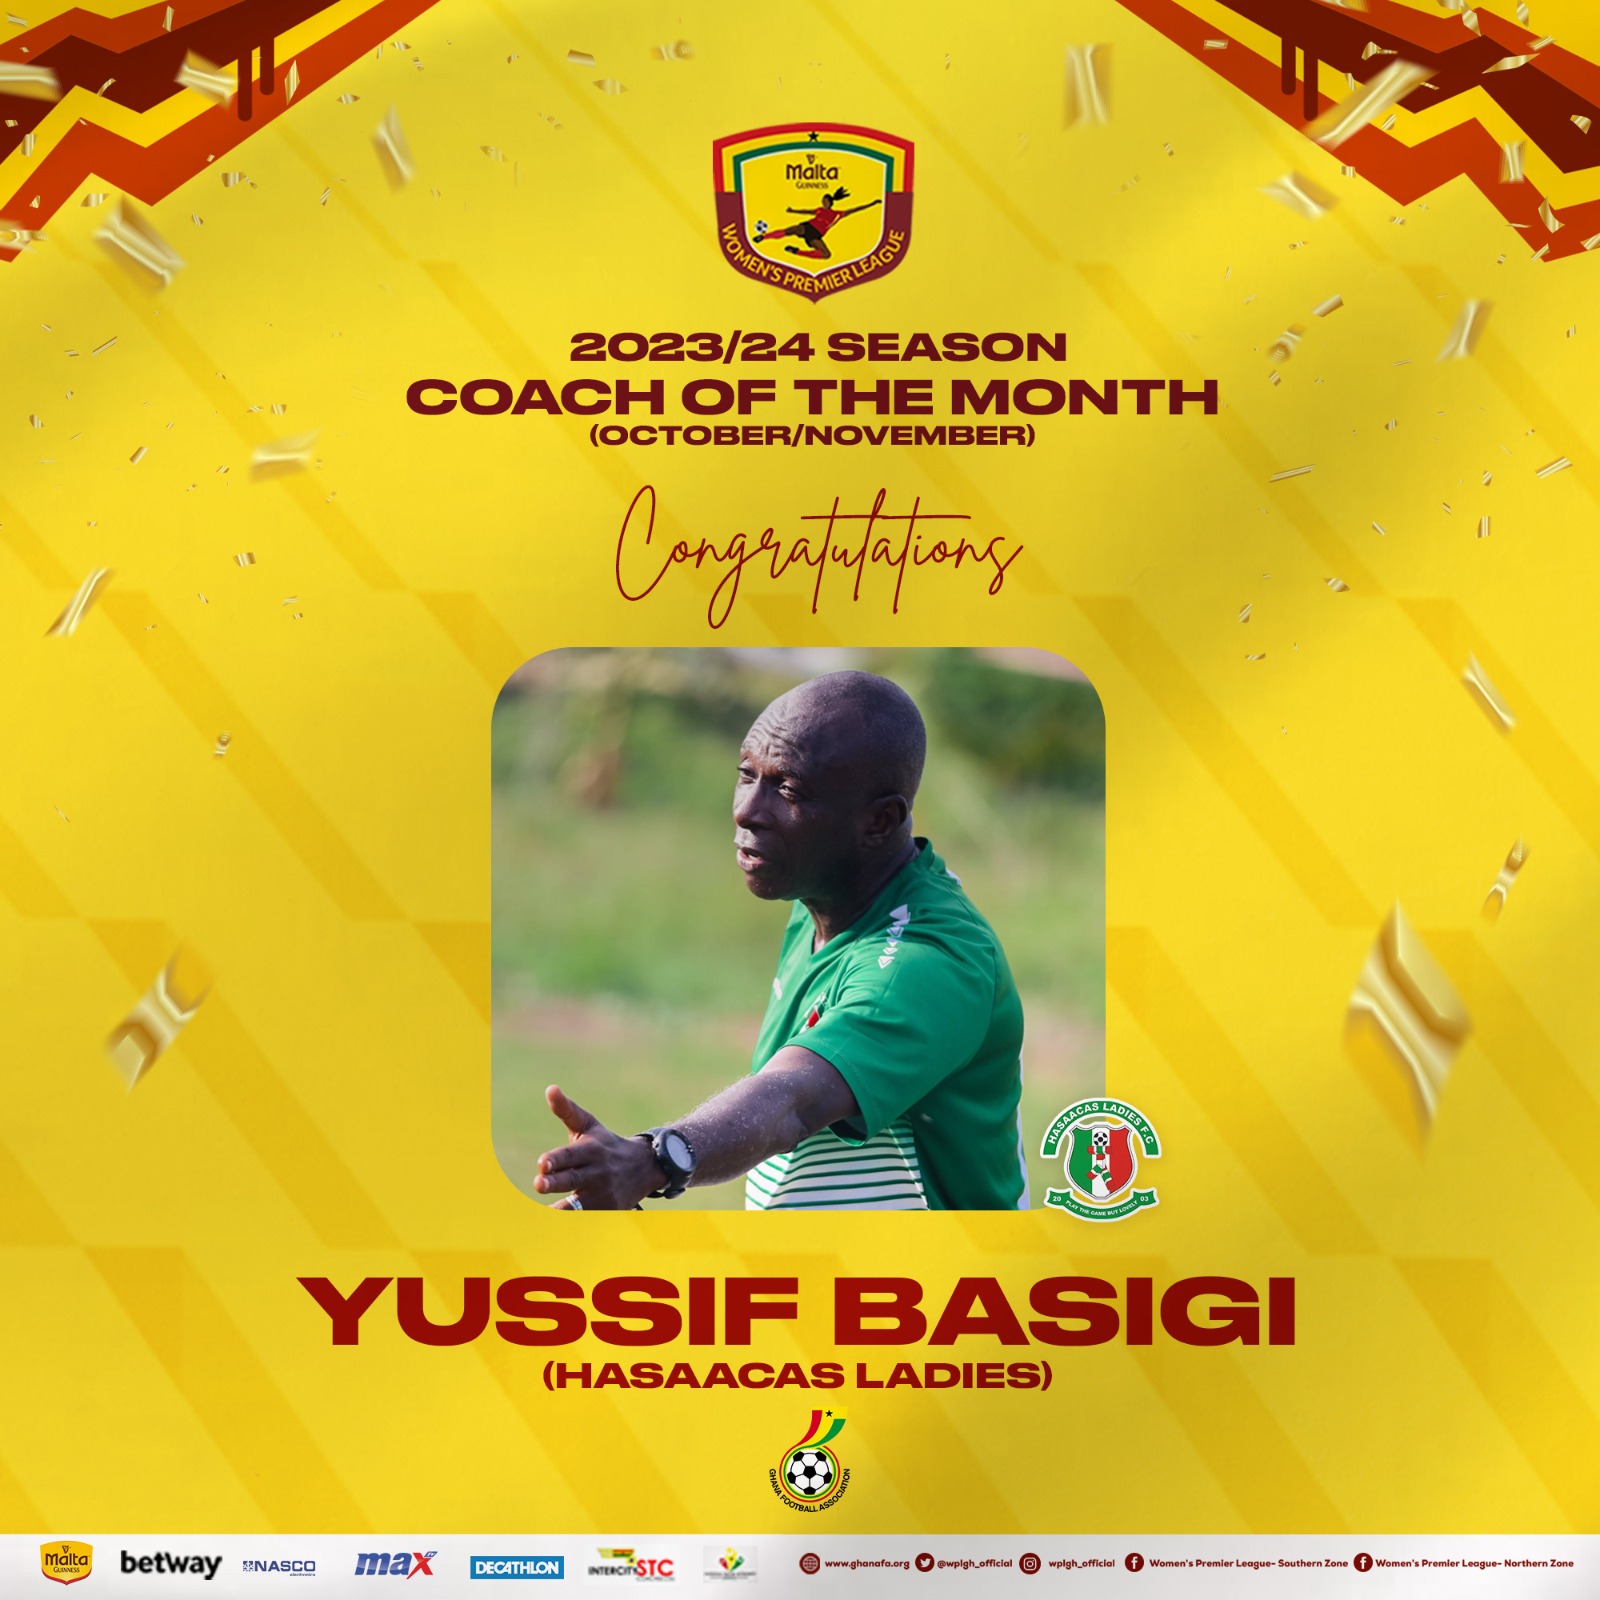 Yussif Basigi wins NASCO Coach of the month for October/November